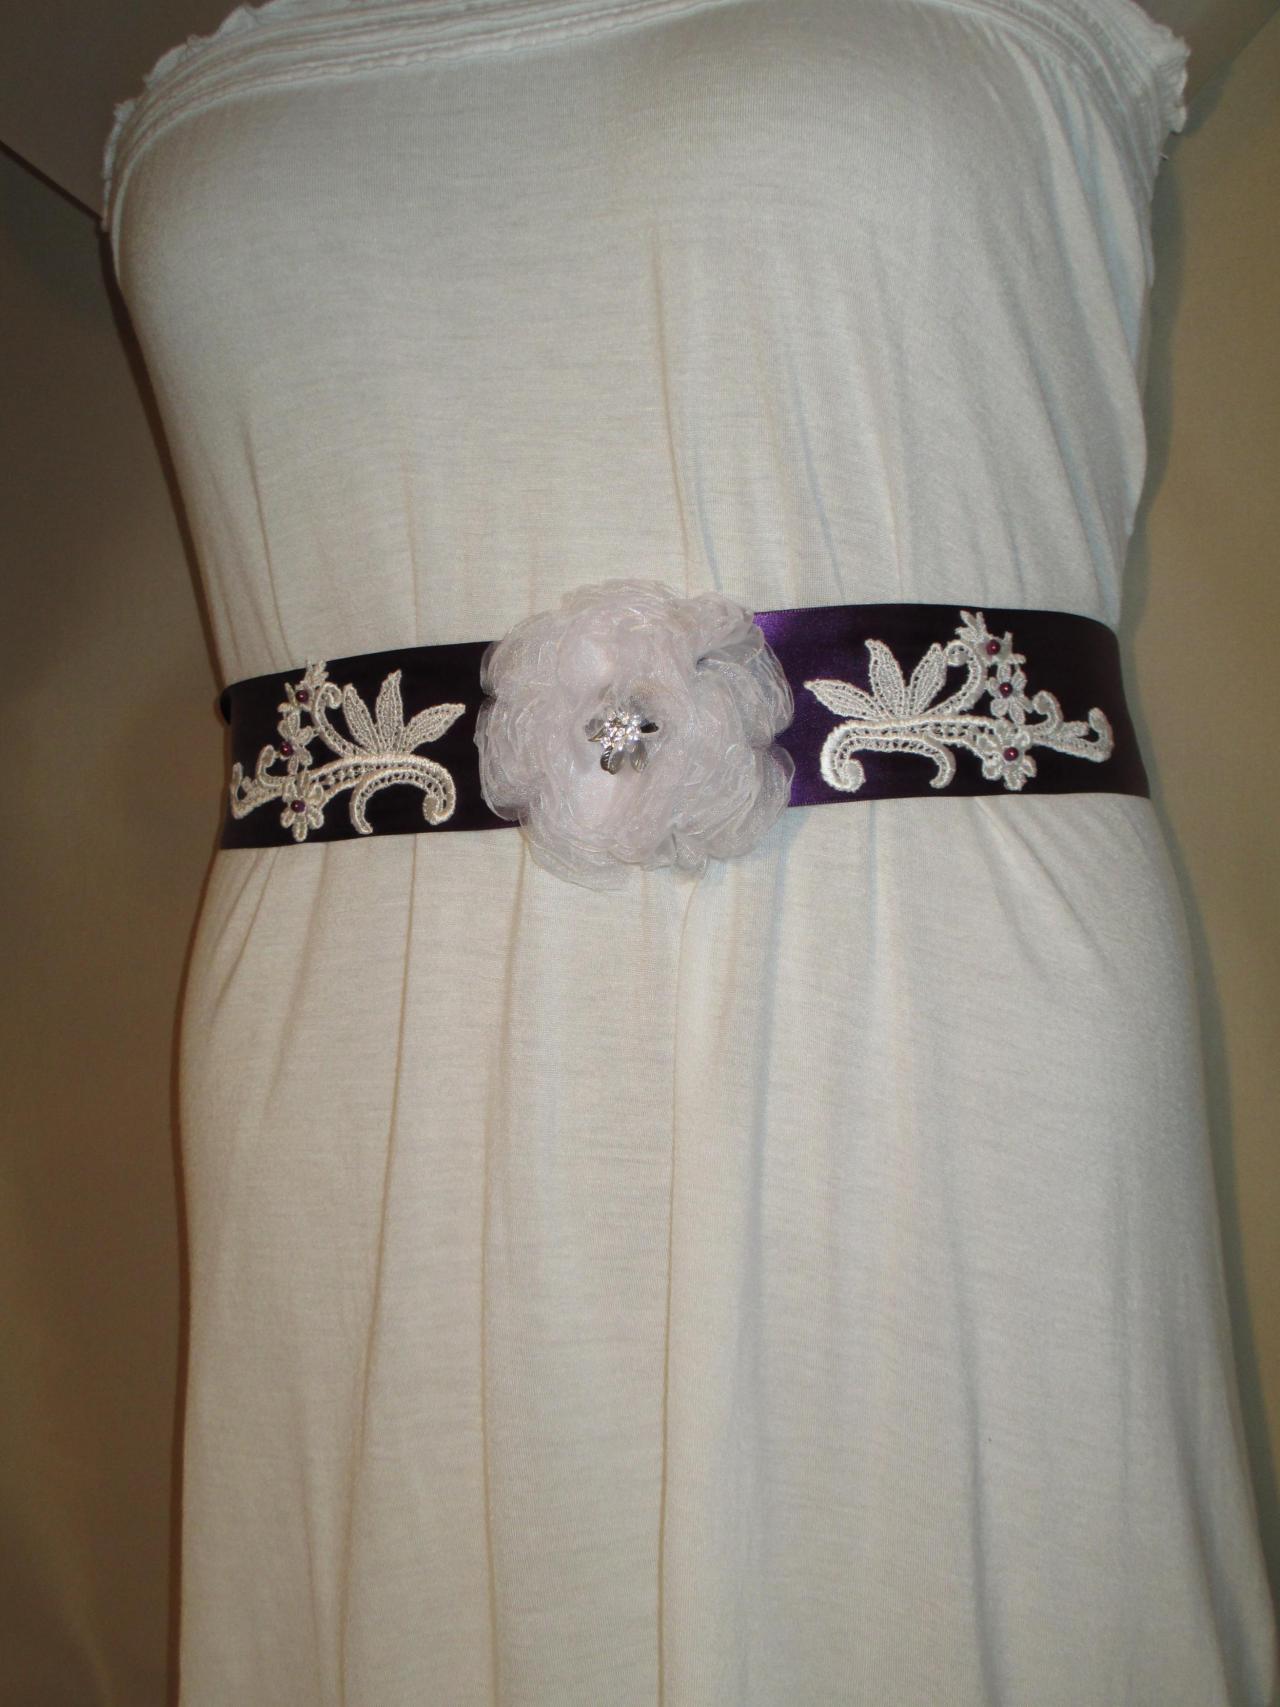 Bridal Sash - Wedding Sash - Eggplant Ribbon - White Lace - Purple Beads -dress Sash - Handmade In Colorado